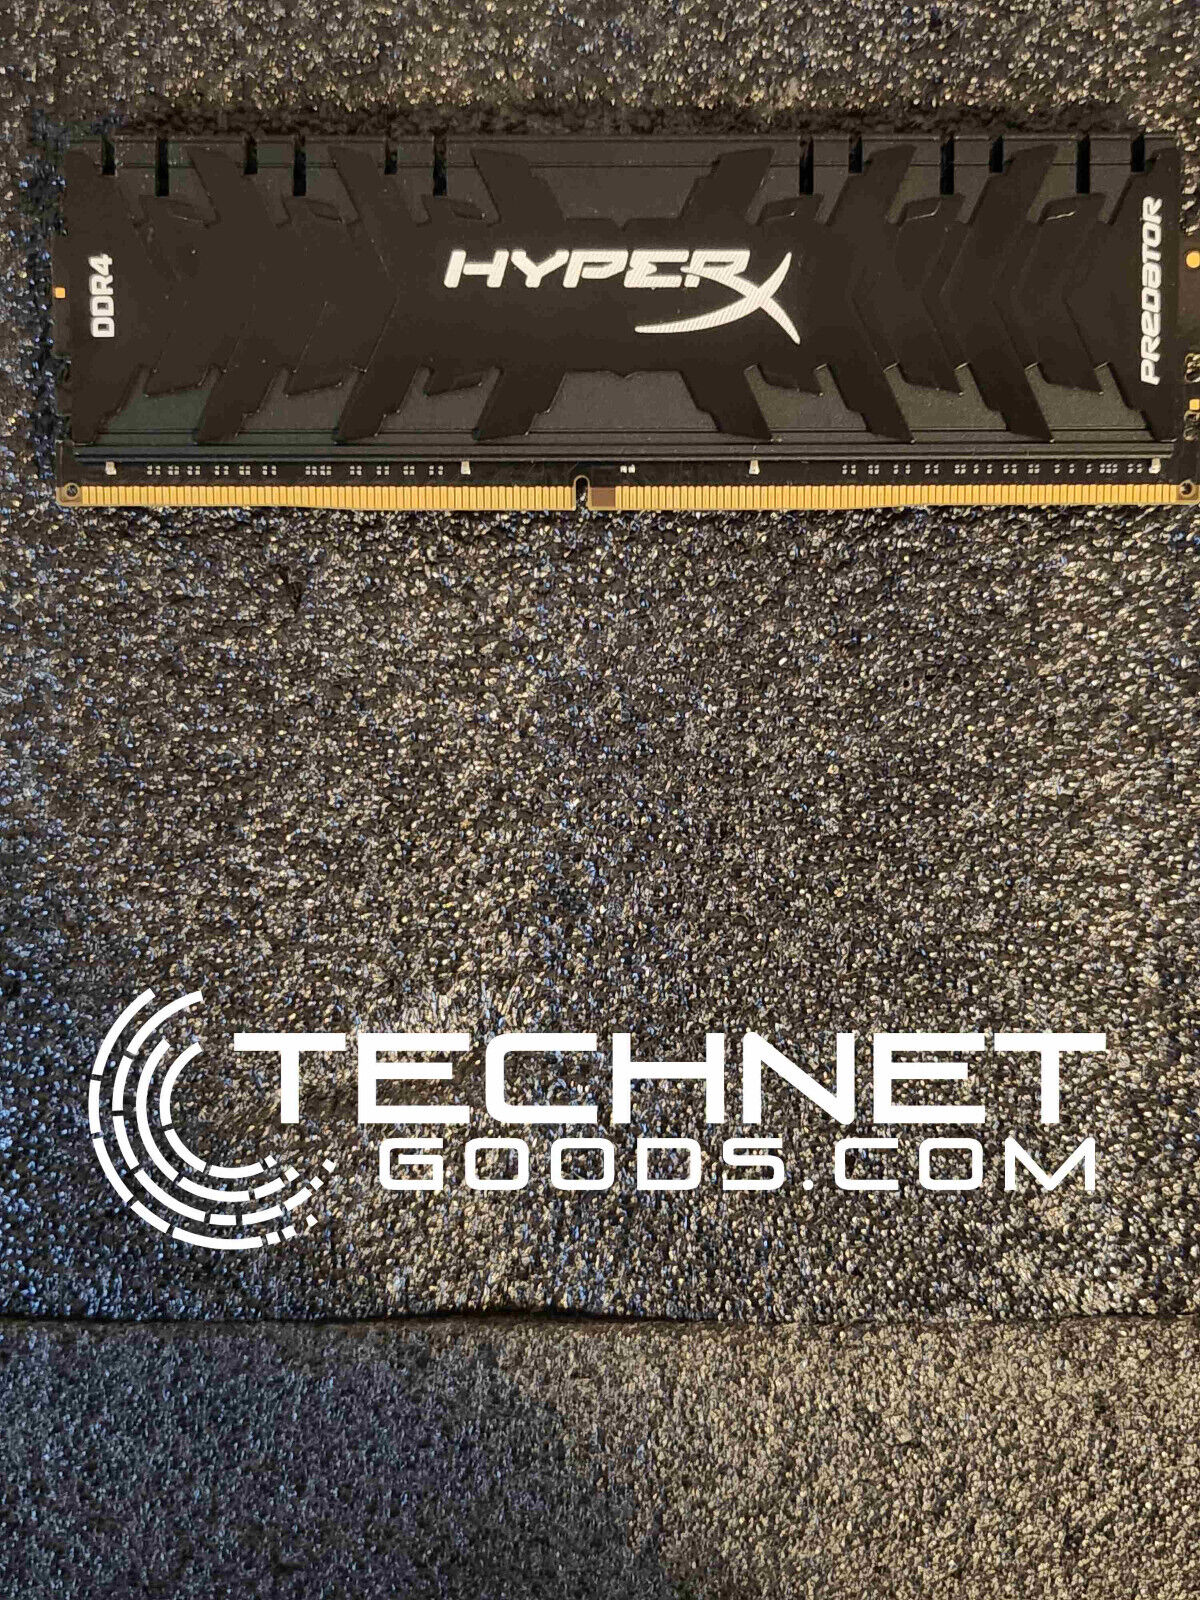 HyperX Predator 16GB (1 x 16GB) DDR4 3600MHz HX436C17PB3/16 - TESTED